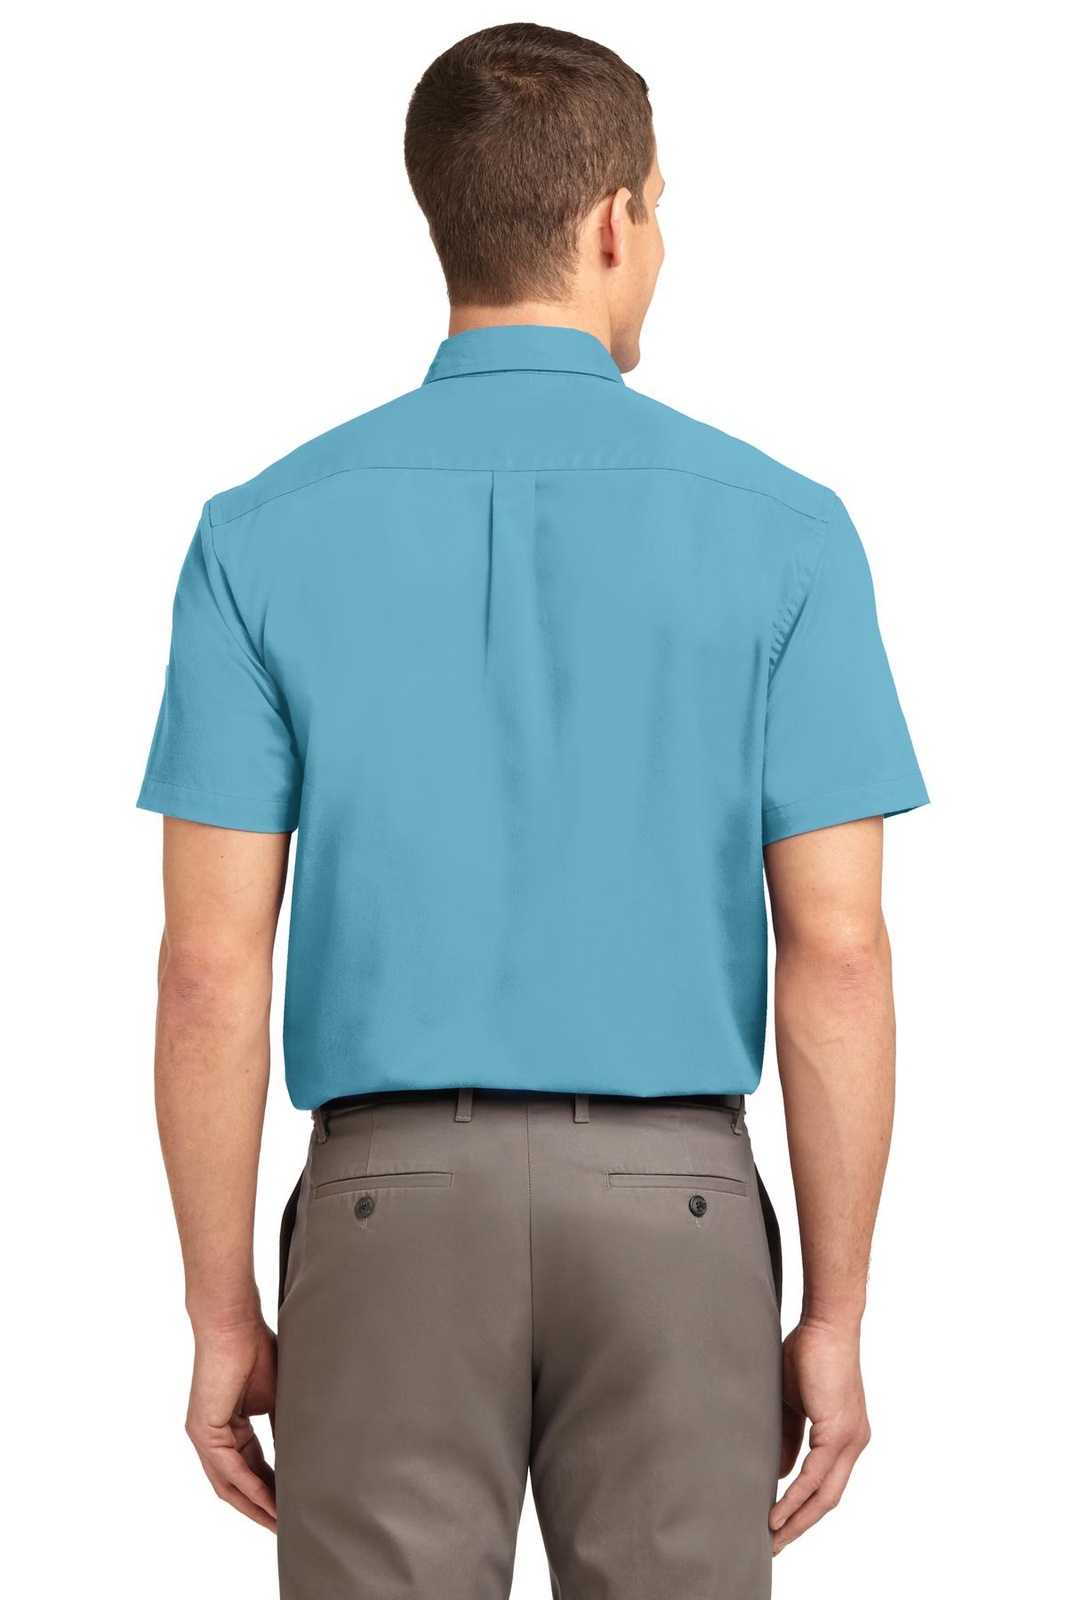 Port Authority TLS508 Tall Short Sleeve Easy Care Shirt - Maui Blue - HIT a Double - 2